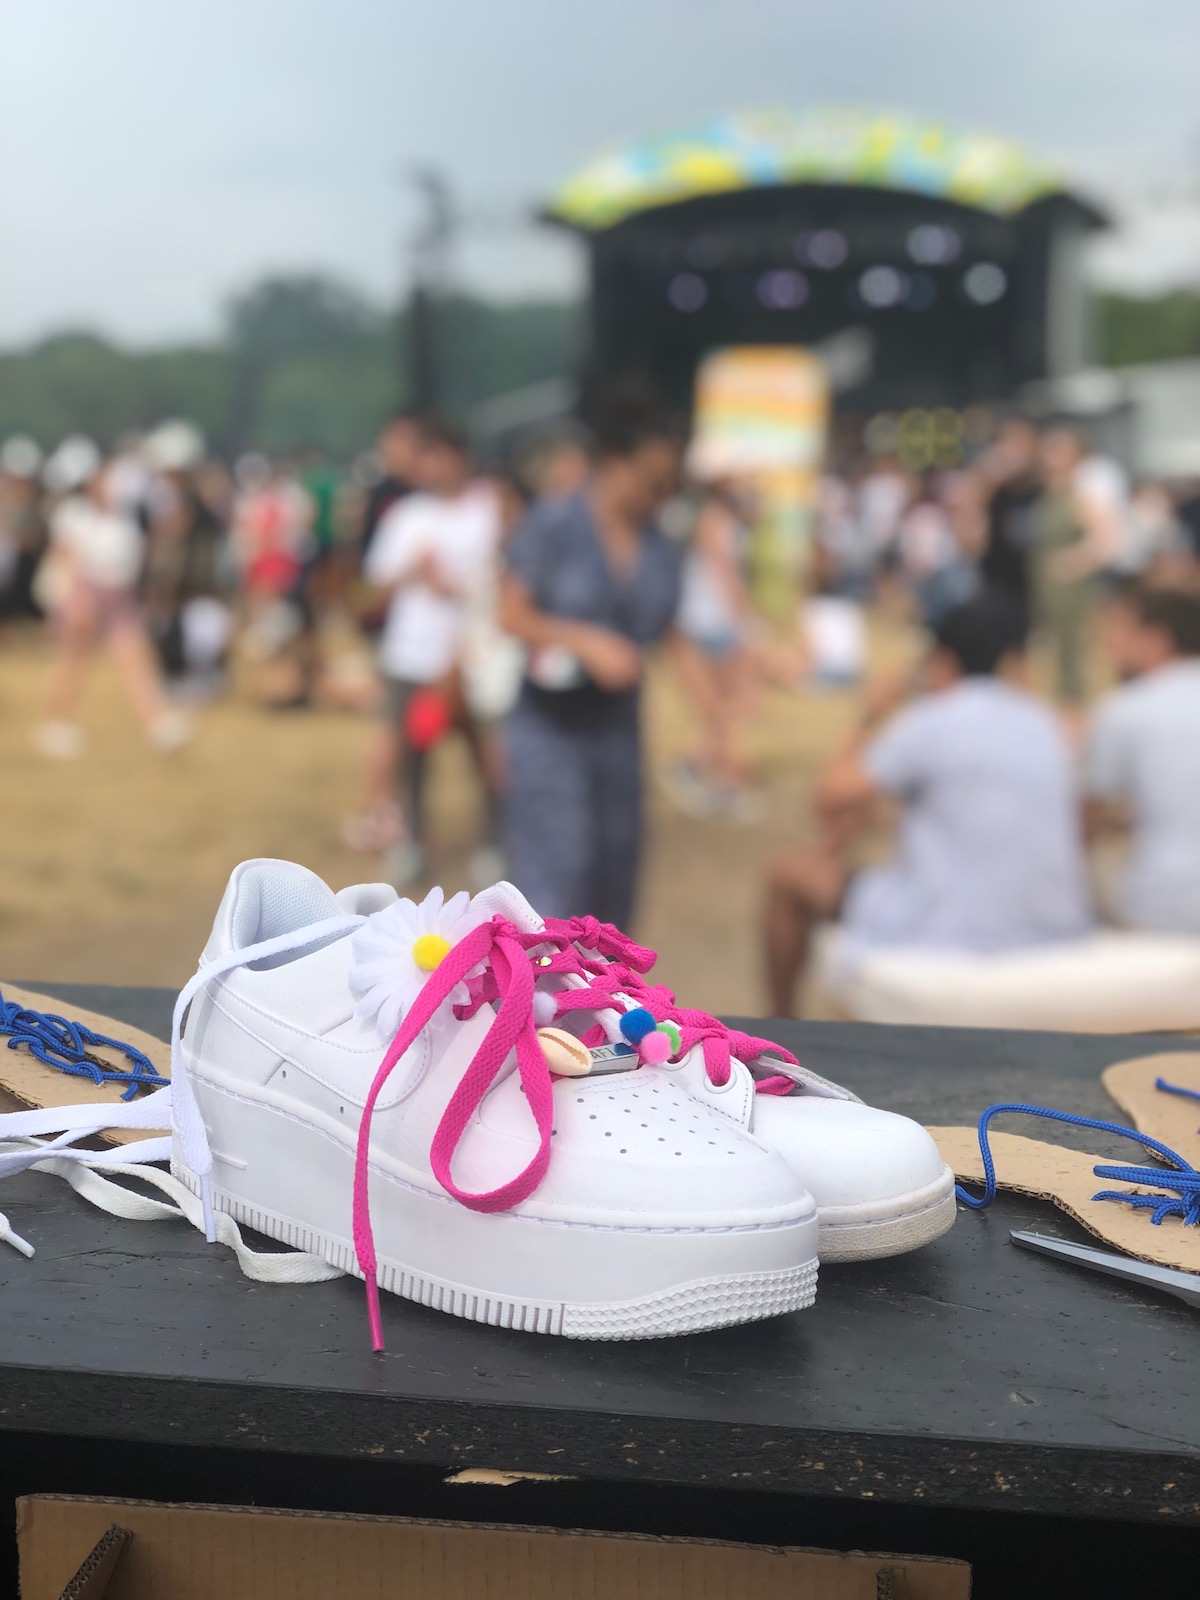 chaussure festival customiser concert basket tendance lacet rose deco clemaroundthecorner